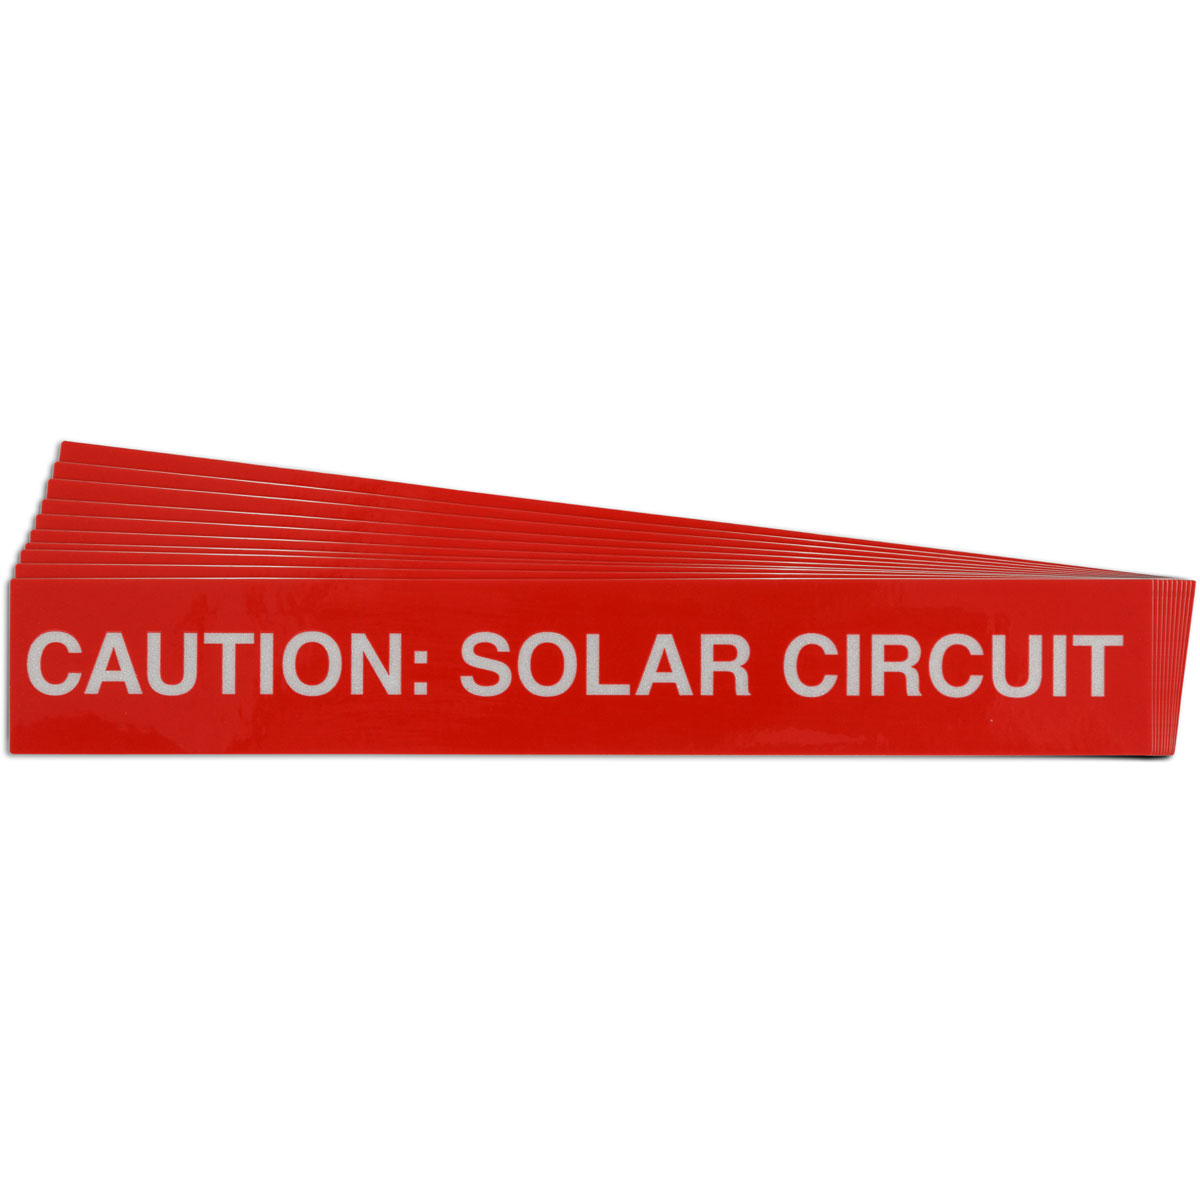 Pre-Printed SOLAR CIRCUIT Warning Labels